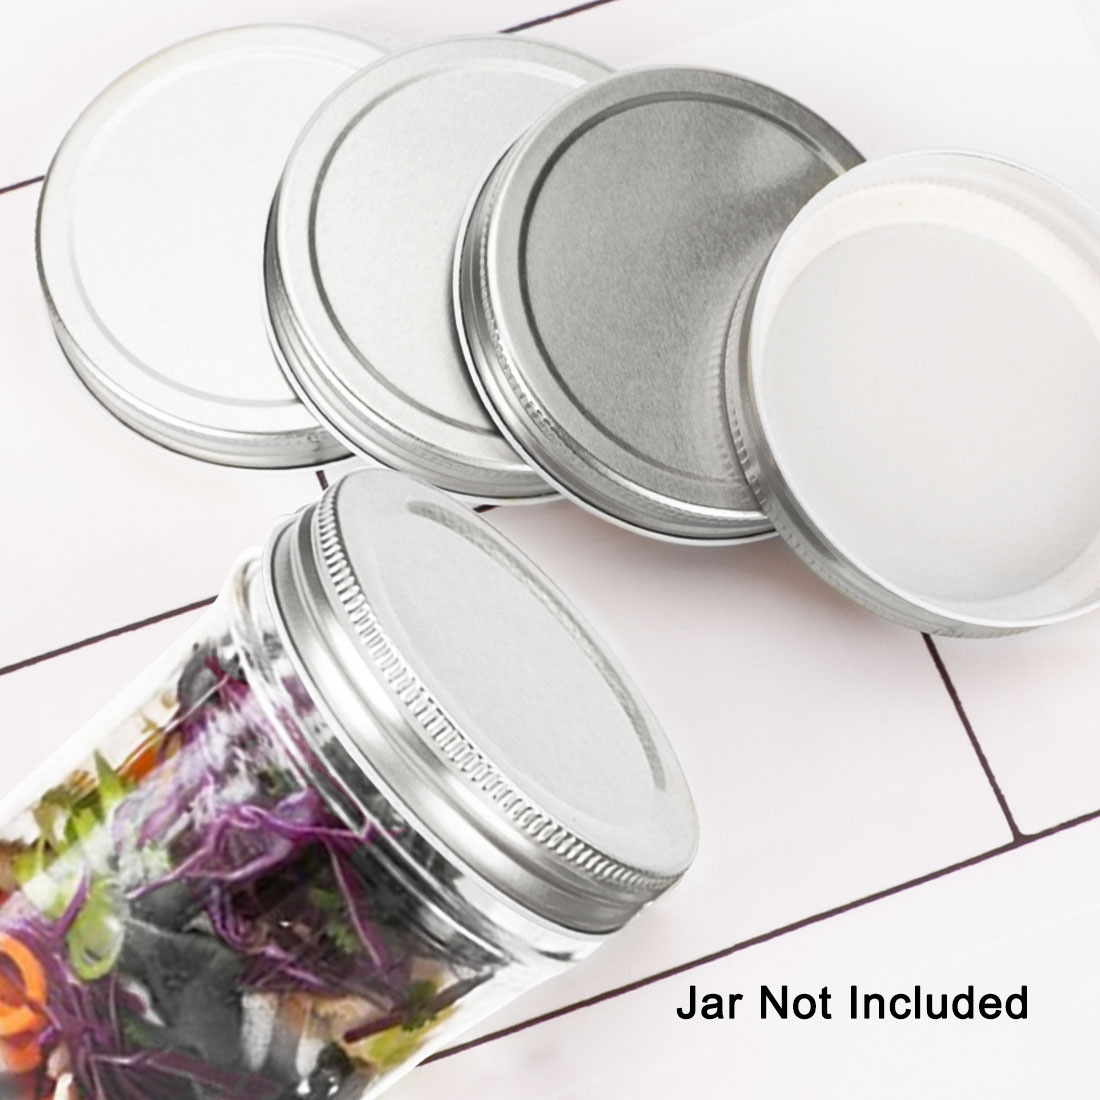 Unique Bargains Plastic Mason Jar Lids for Wide Mouth Mason Canning Storage Jars Cups